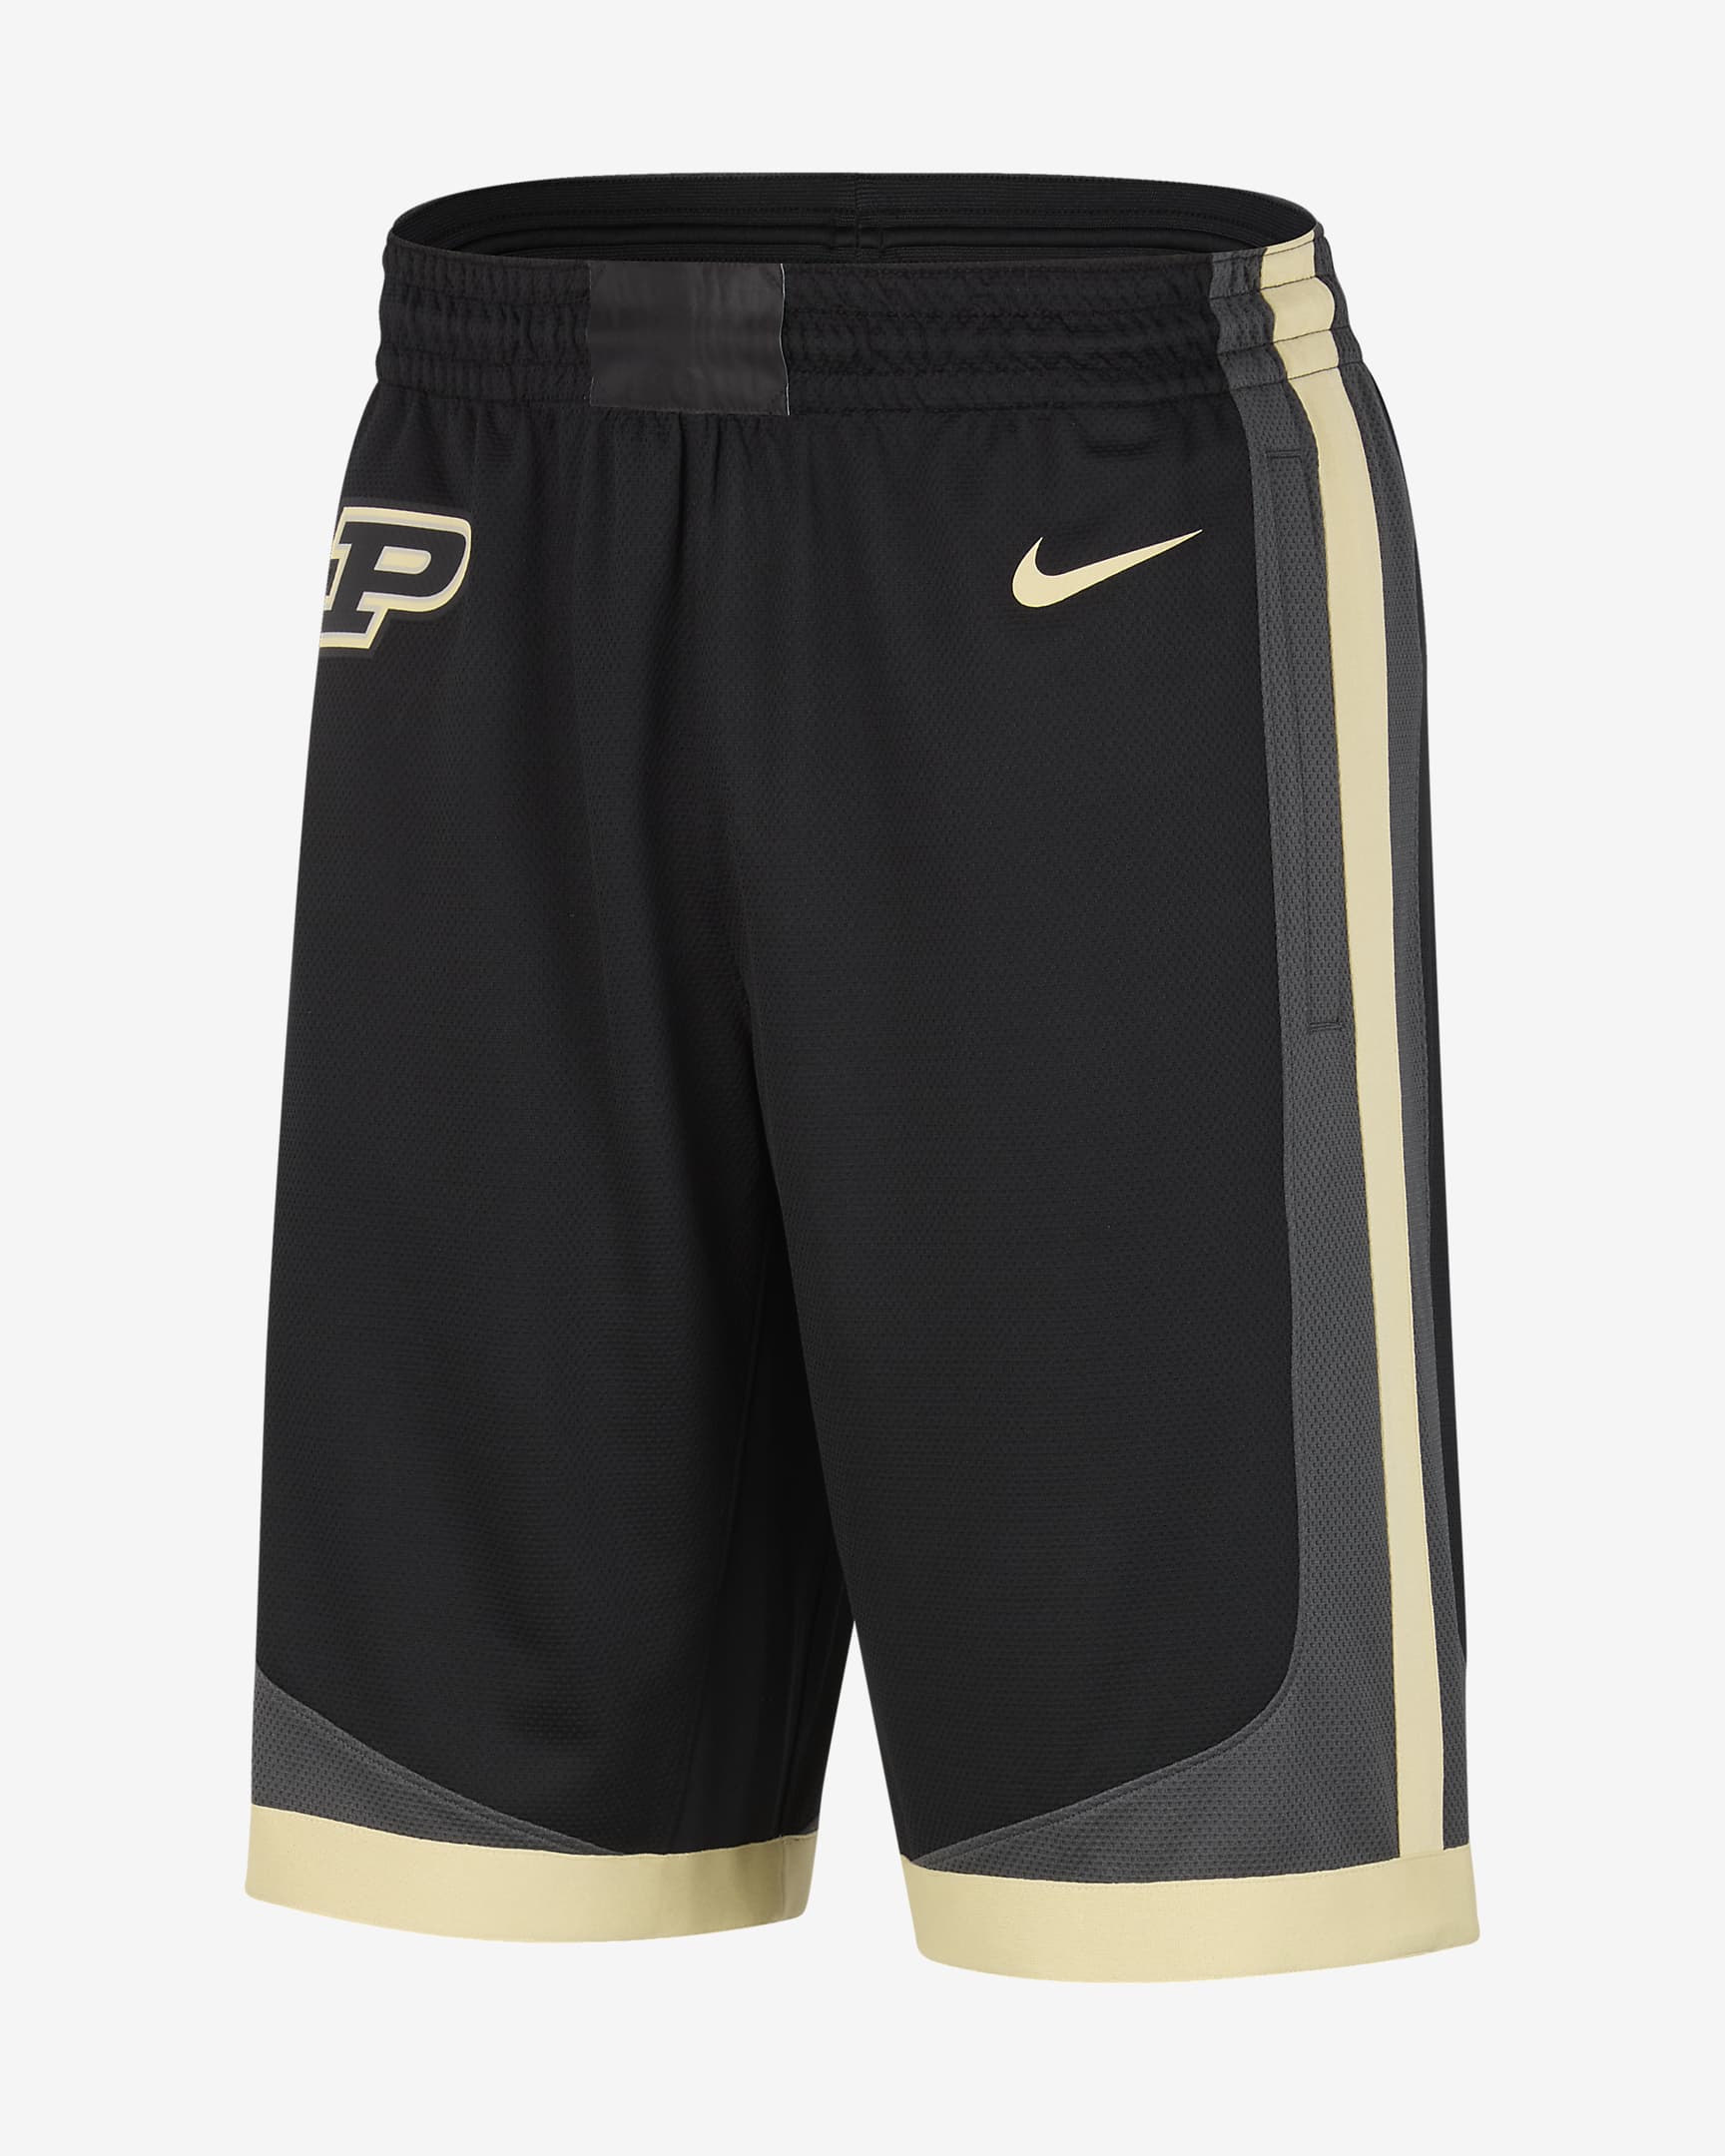 Nike College (Purdue) Men's Replica Basketball Shorts. Nike.com